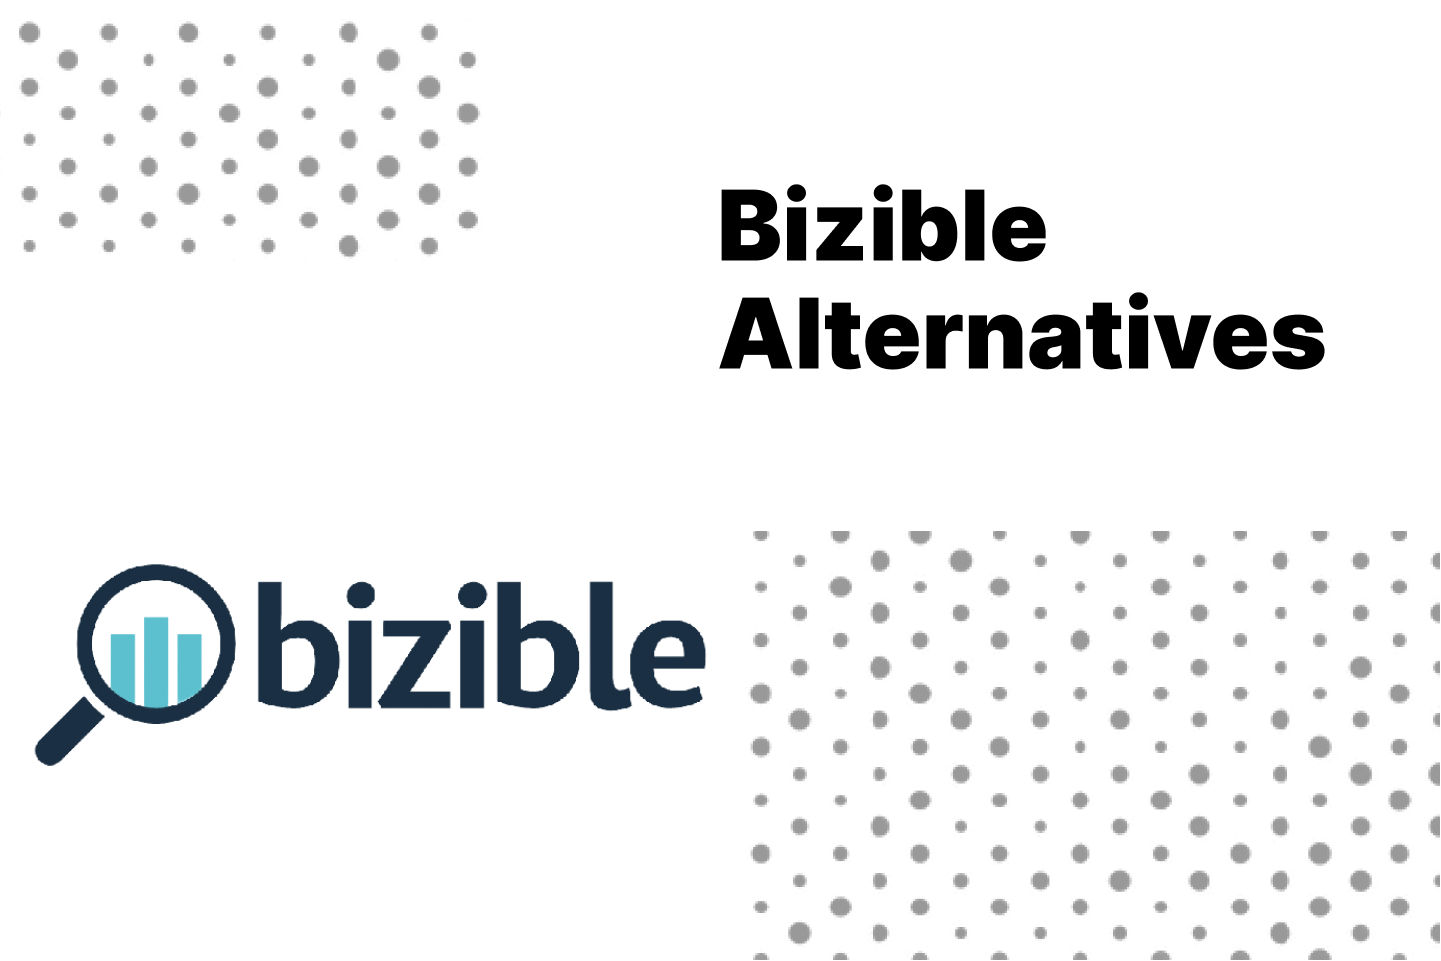 Top Bizible Alternatives